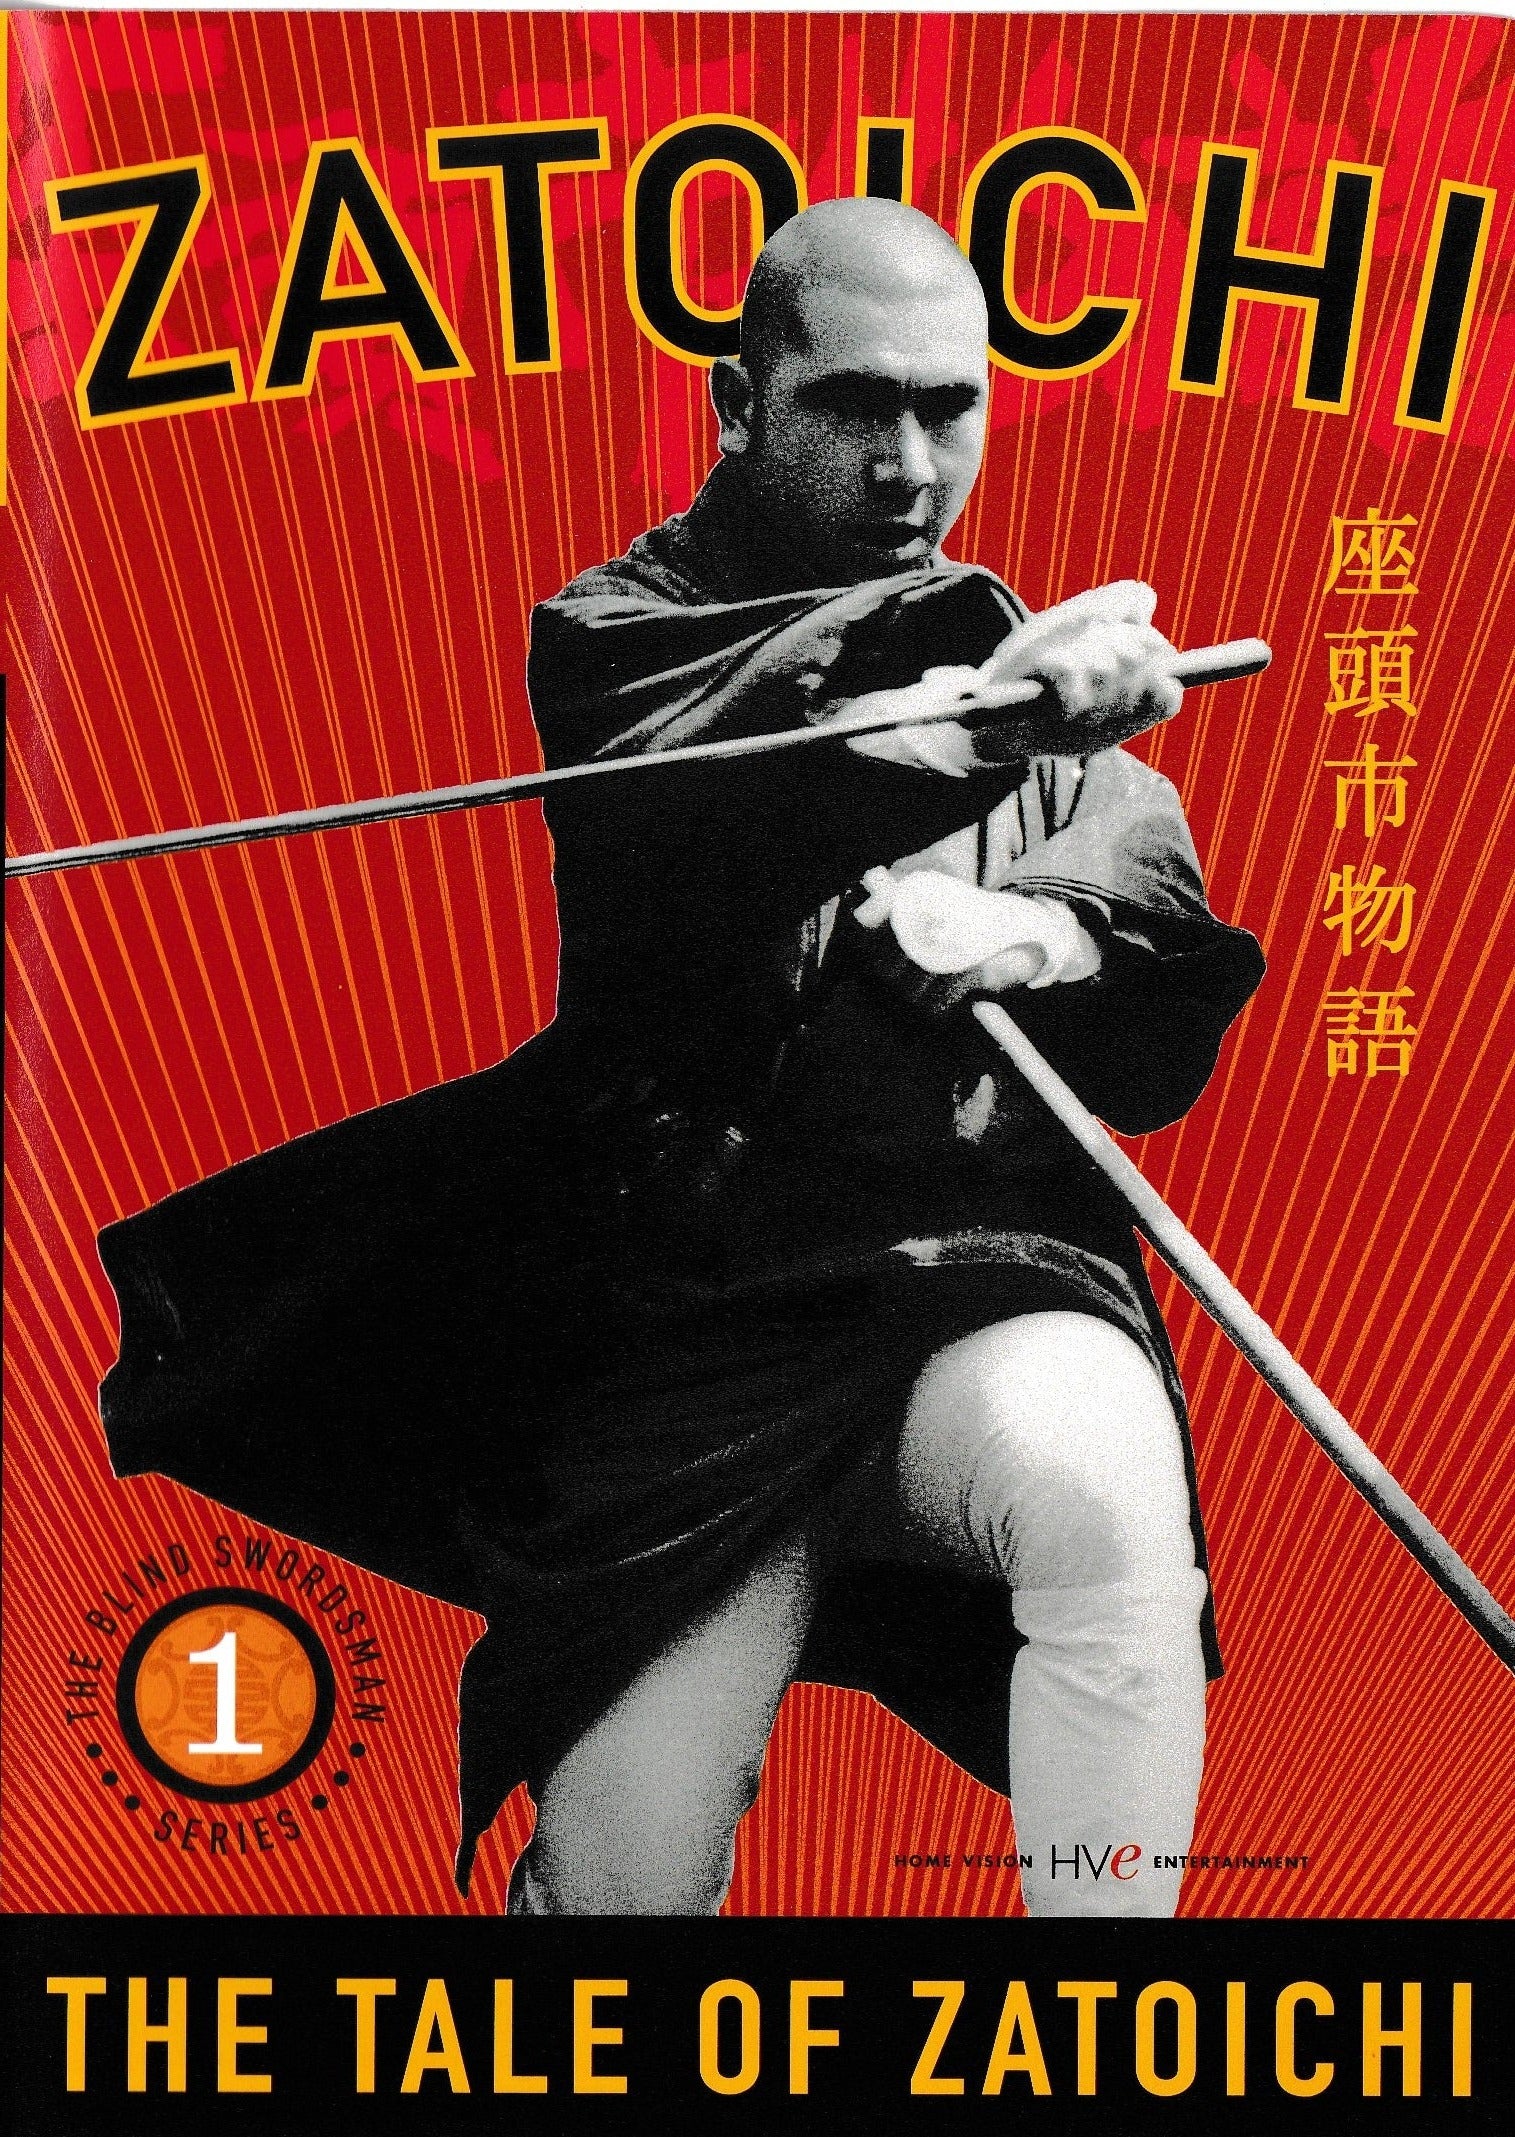 Zatoichi Blind Swordsman #1 The Legend DVD - Classic Japanese Samurai Action